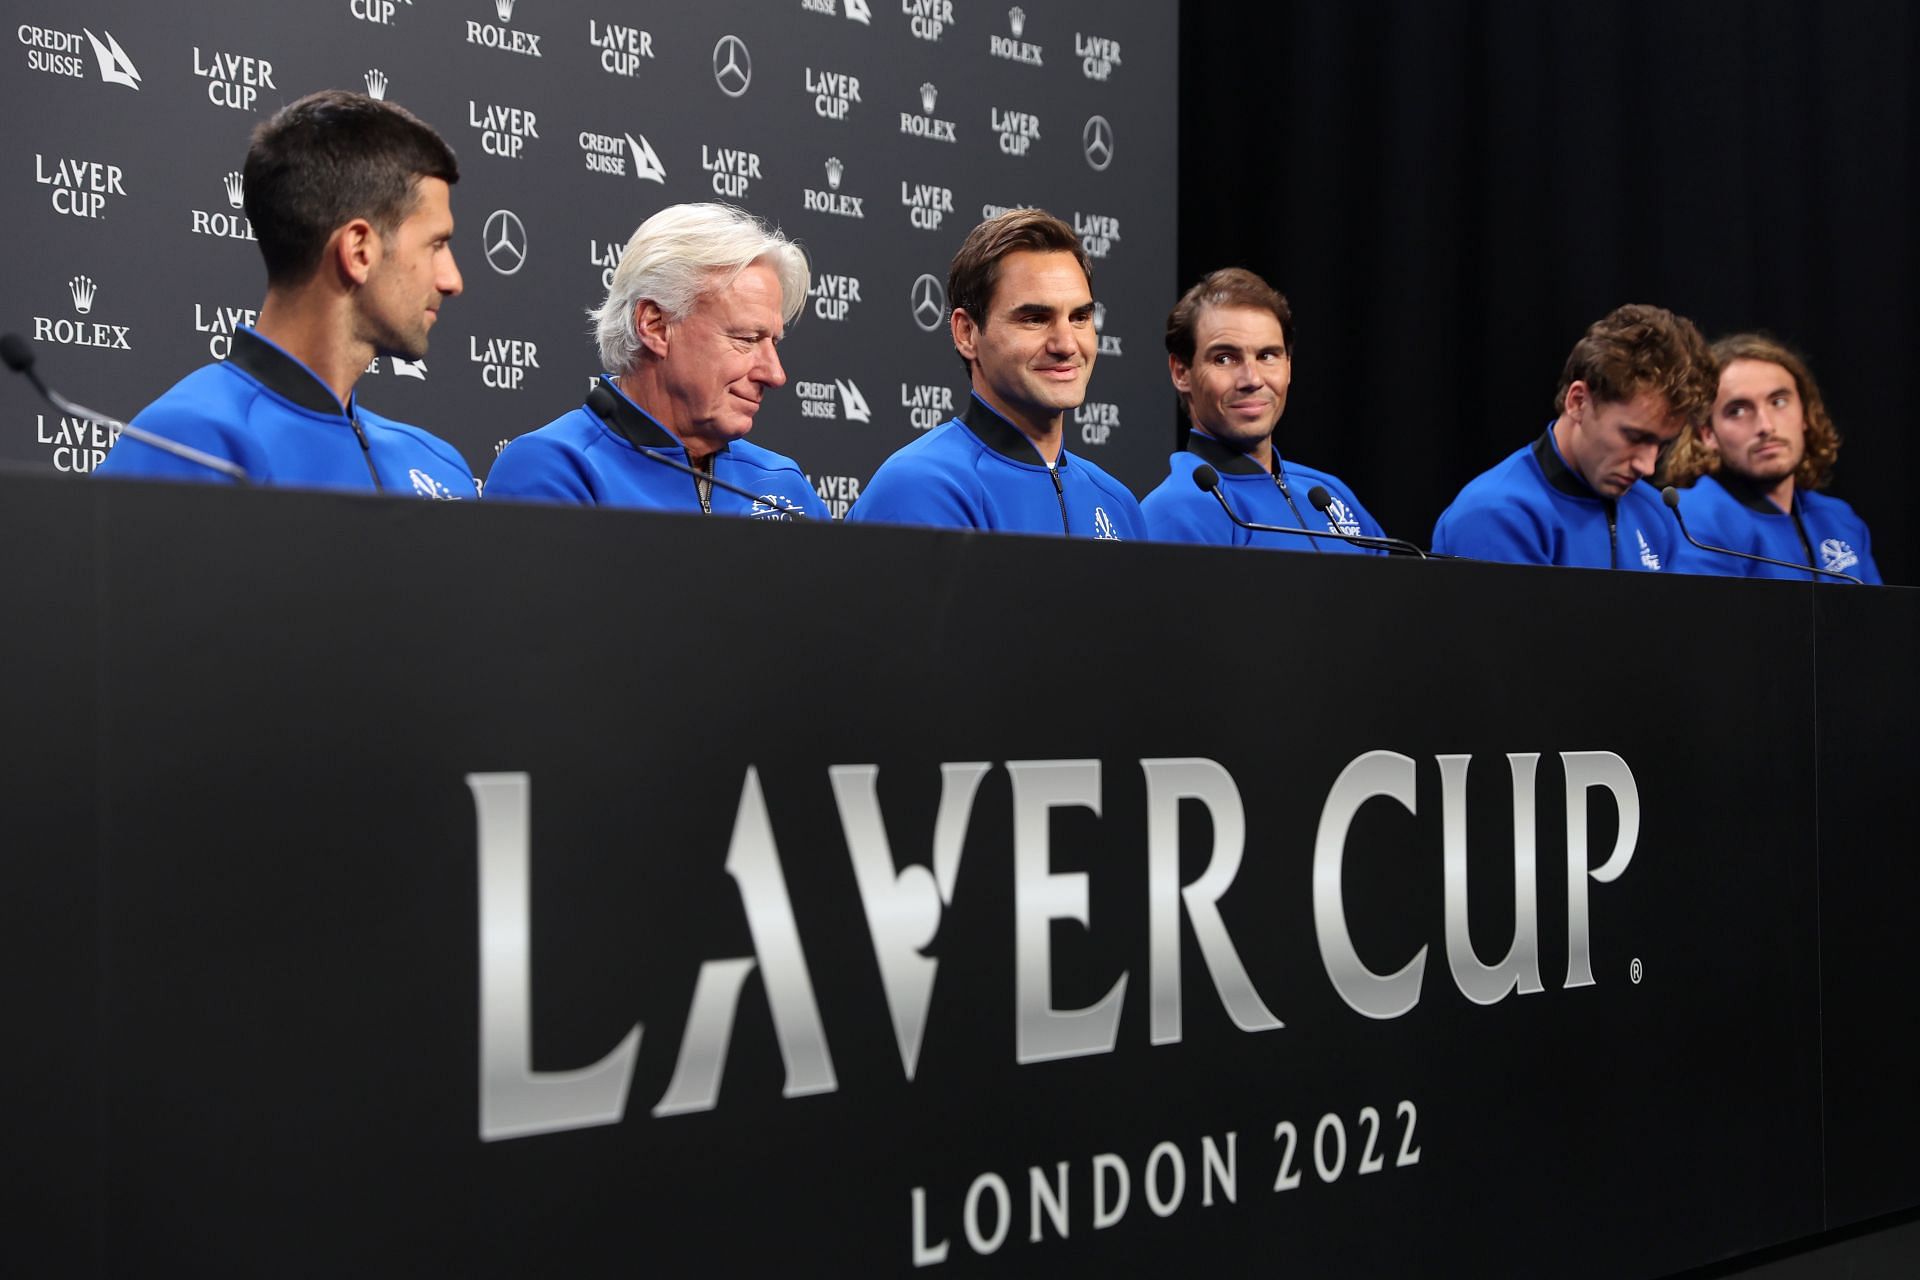 Novak Djokovic, Bjorn Borg, Roger Federer, Rafael Nadal, Casper Ruud and Stefanos Tsitsipas pictured at a press conference.